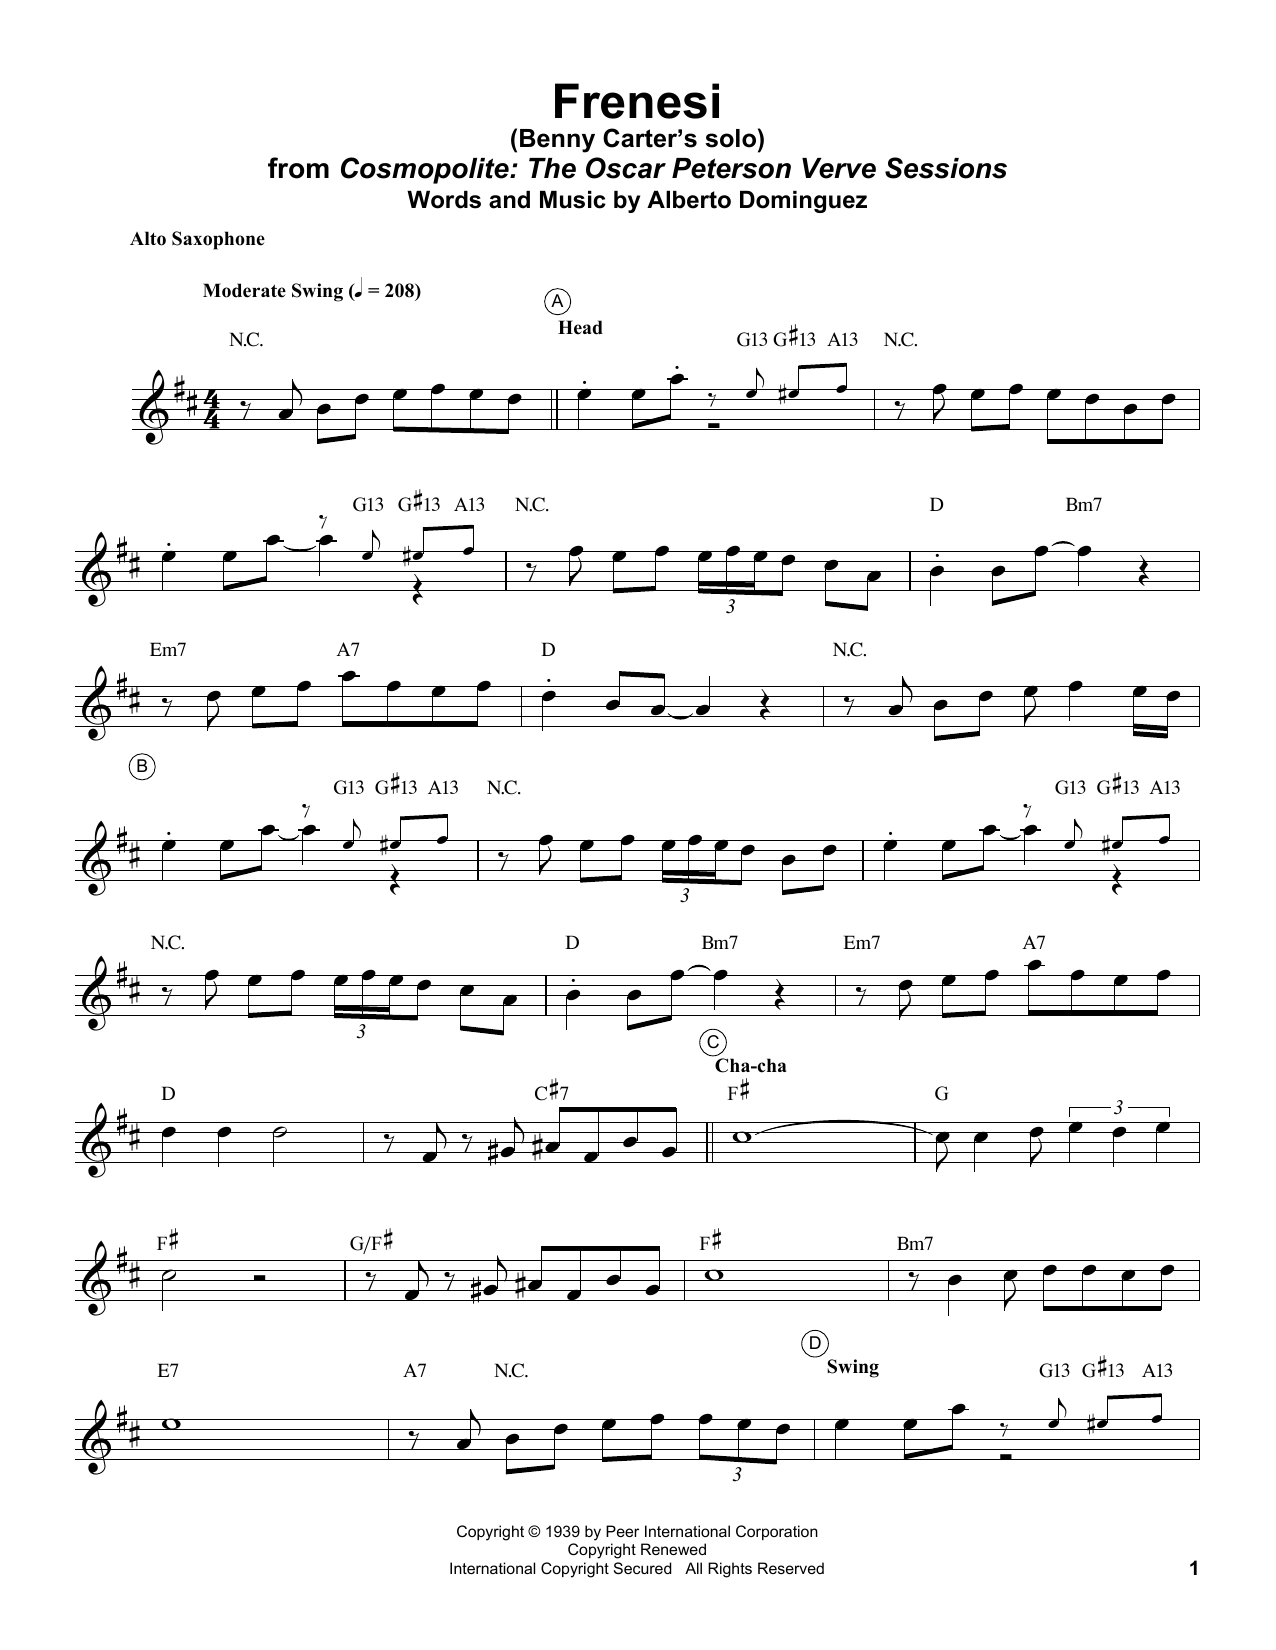 Benny Carter Frenesí Sheet Music Notes & Chords for Alto Sax Transcription - Download or Print PDF